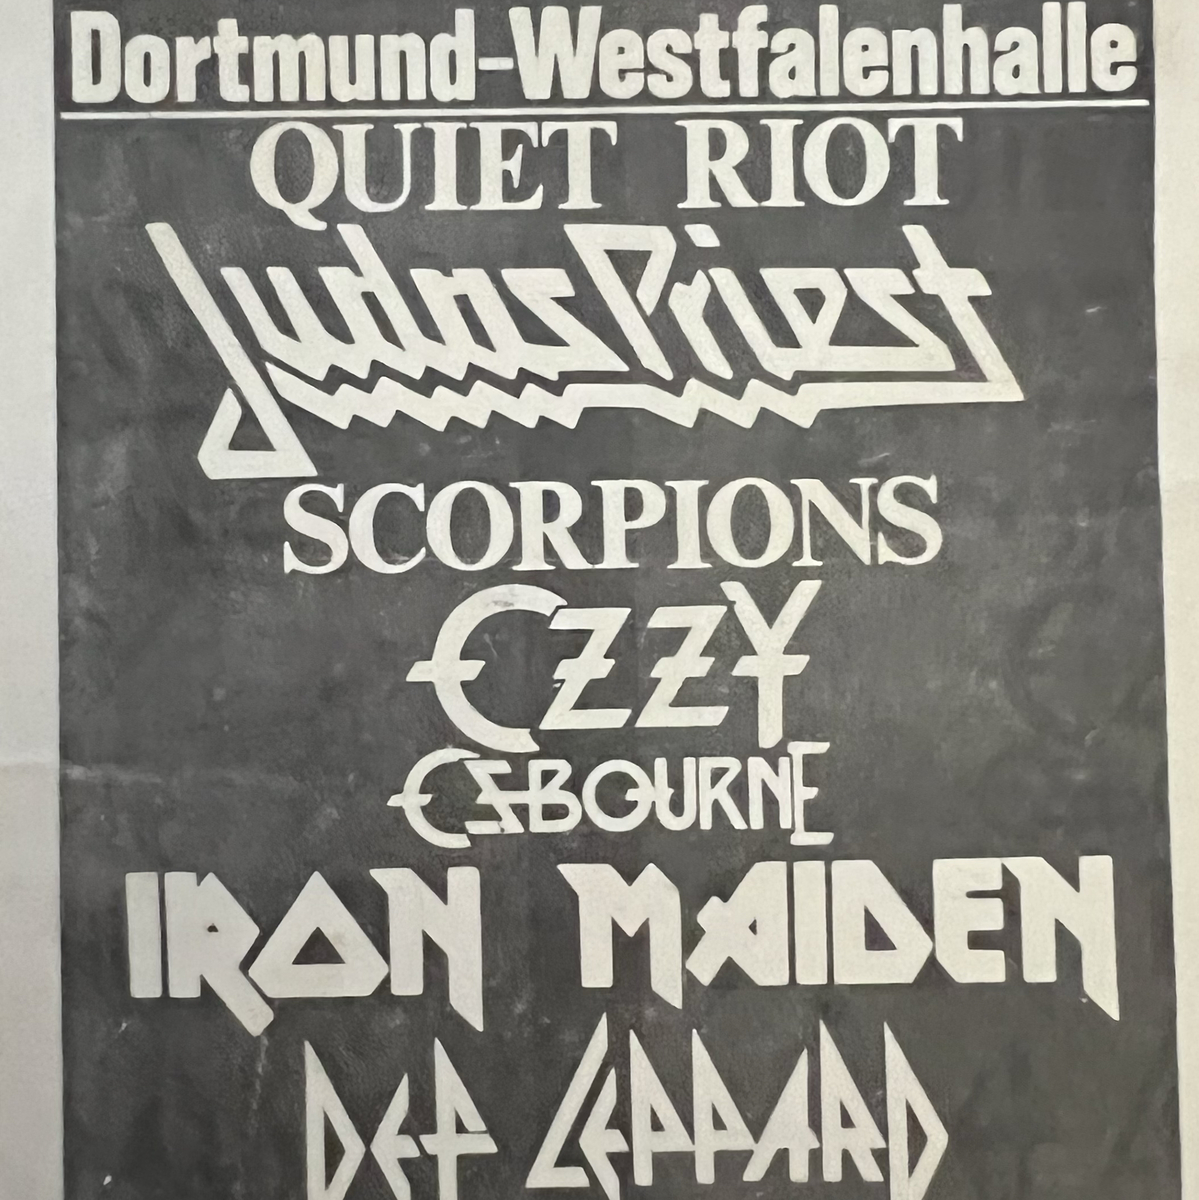 Dec 18 1983 Iron Maiden Judas Priest Scorpions Ozzy Osbourne